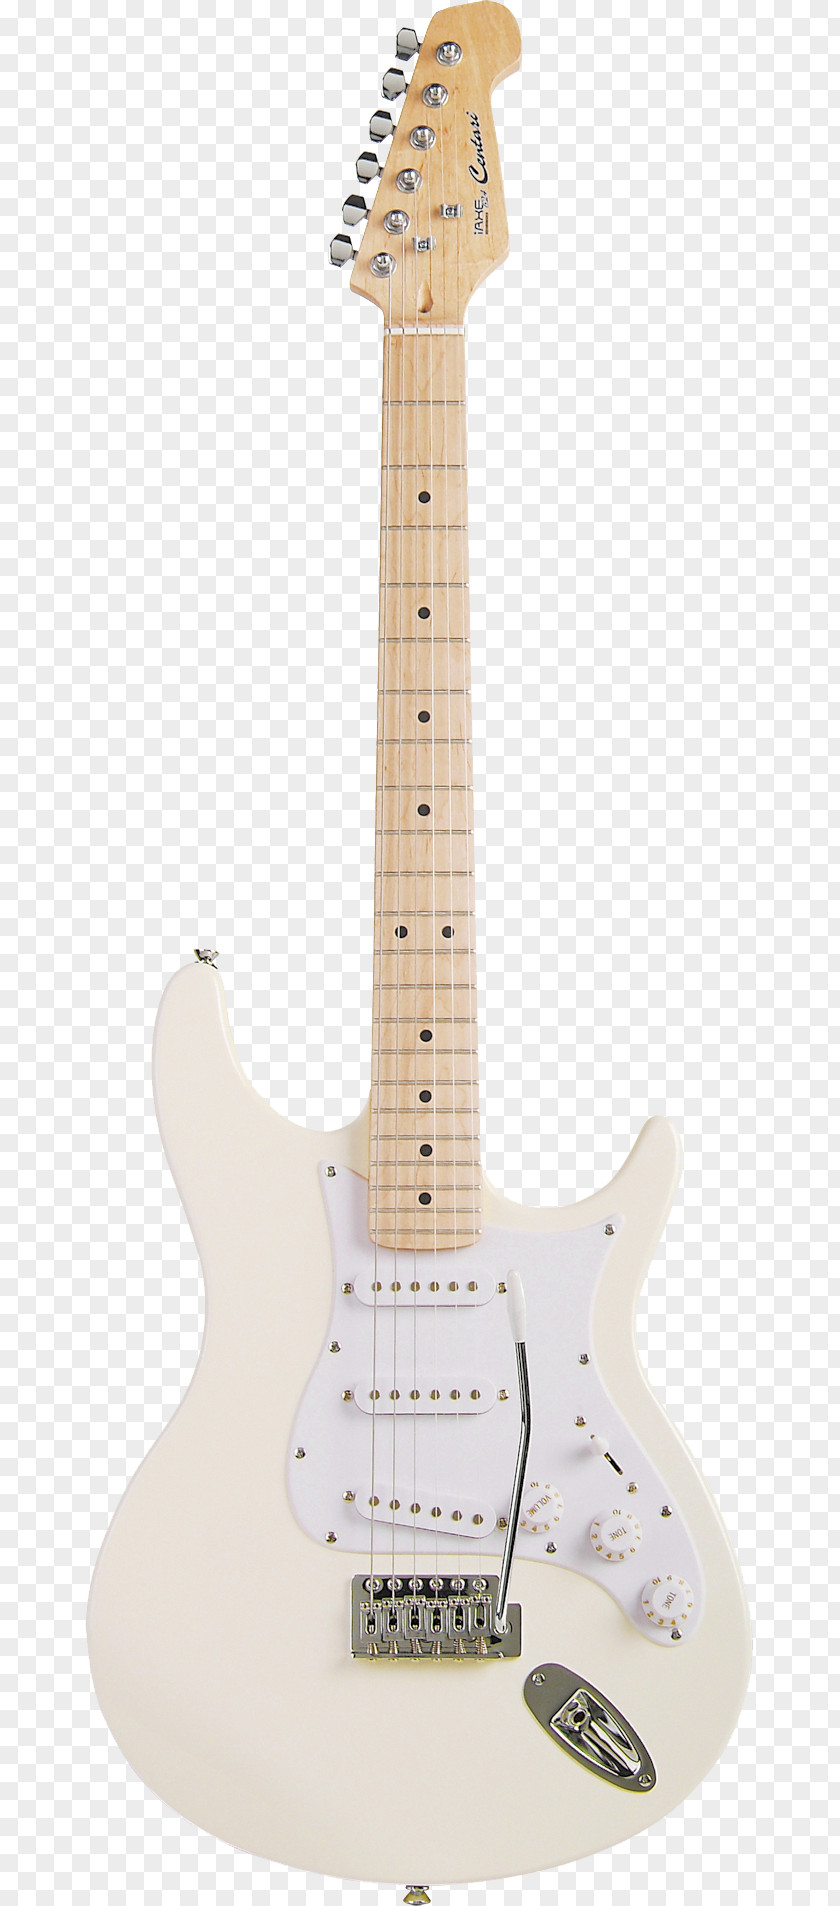 Electric Guitar Fender Stratocaster Telecaster Thinline Bullet PNG